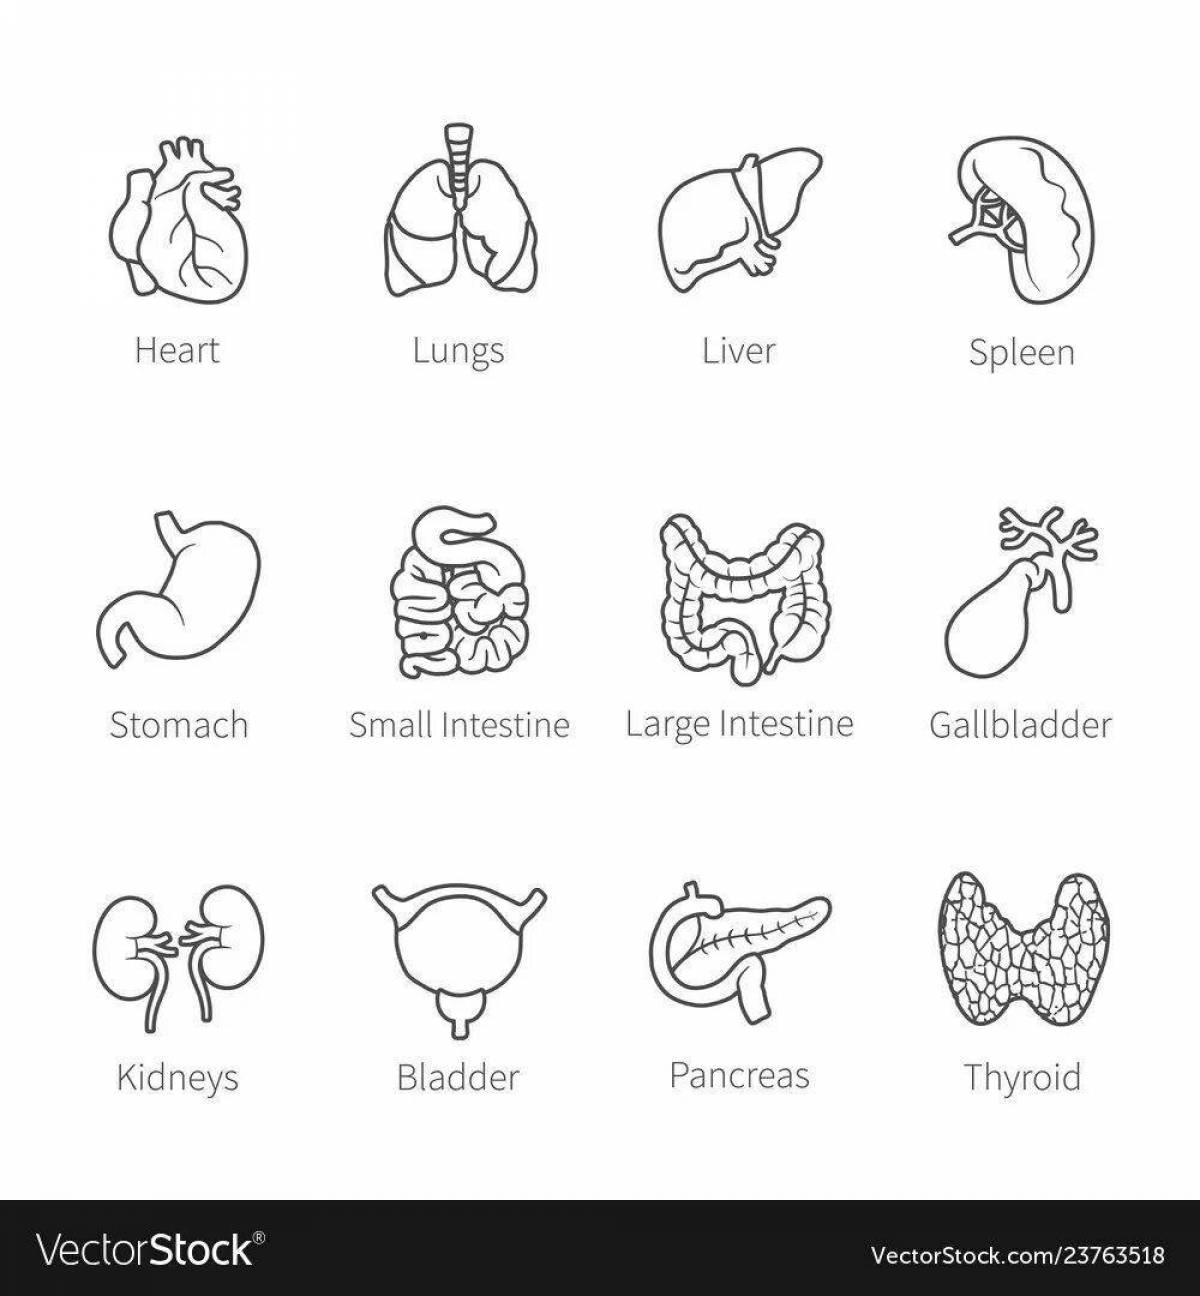 Detailed coloring of internal organs